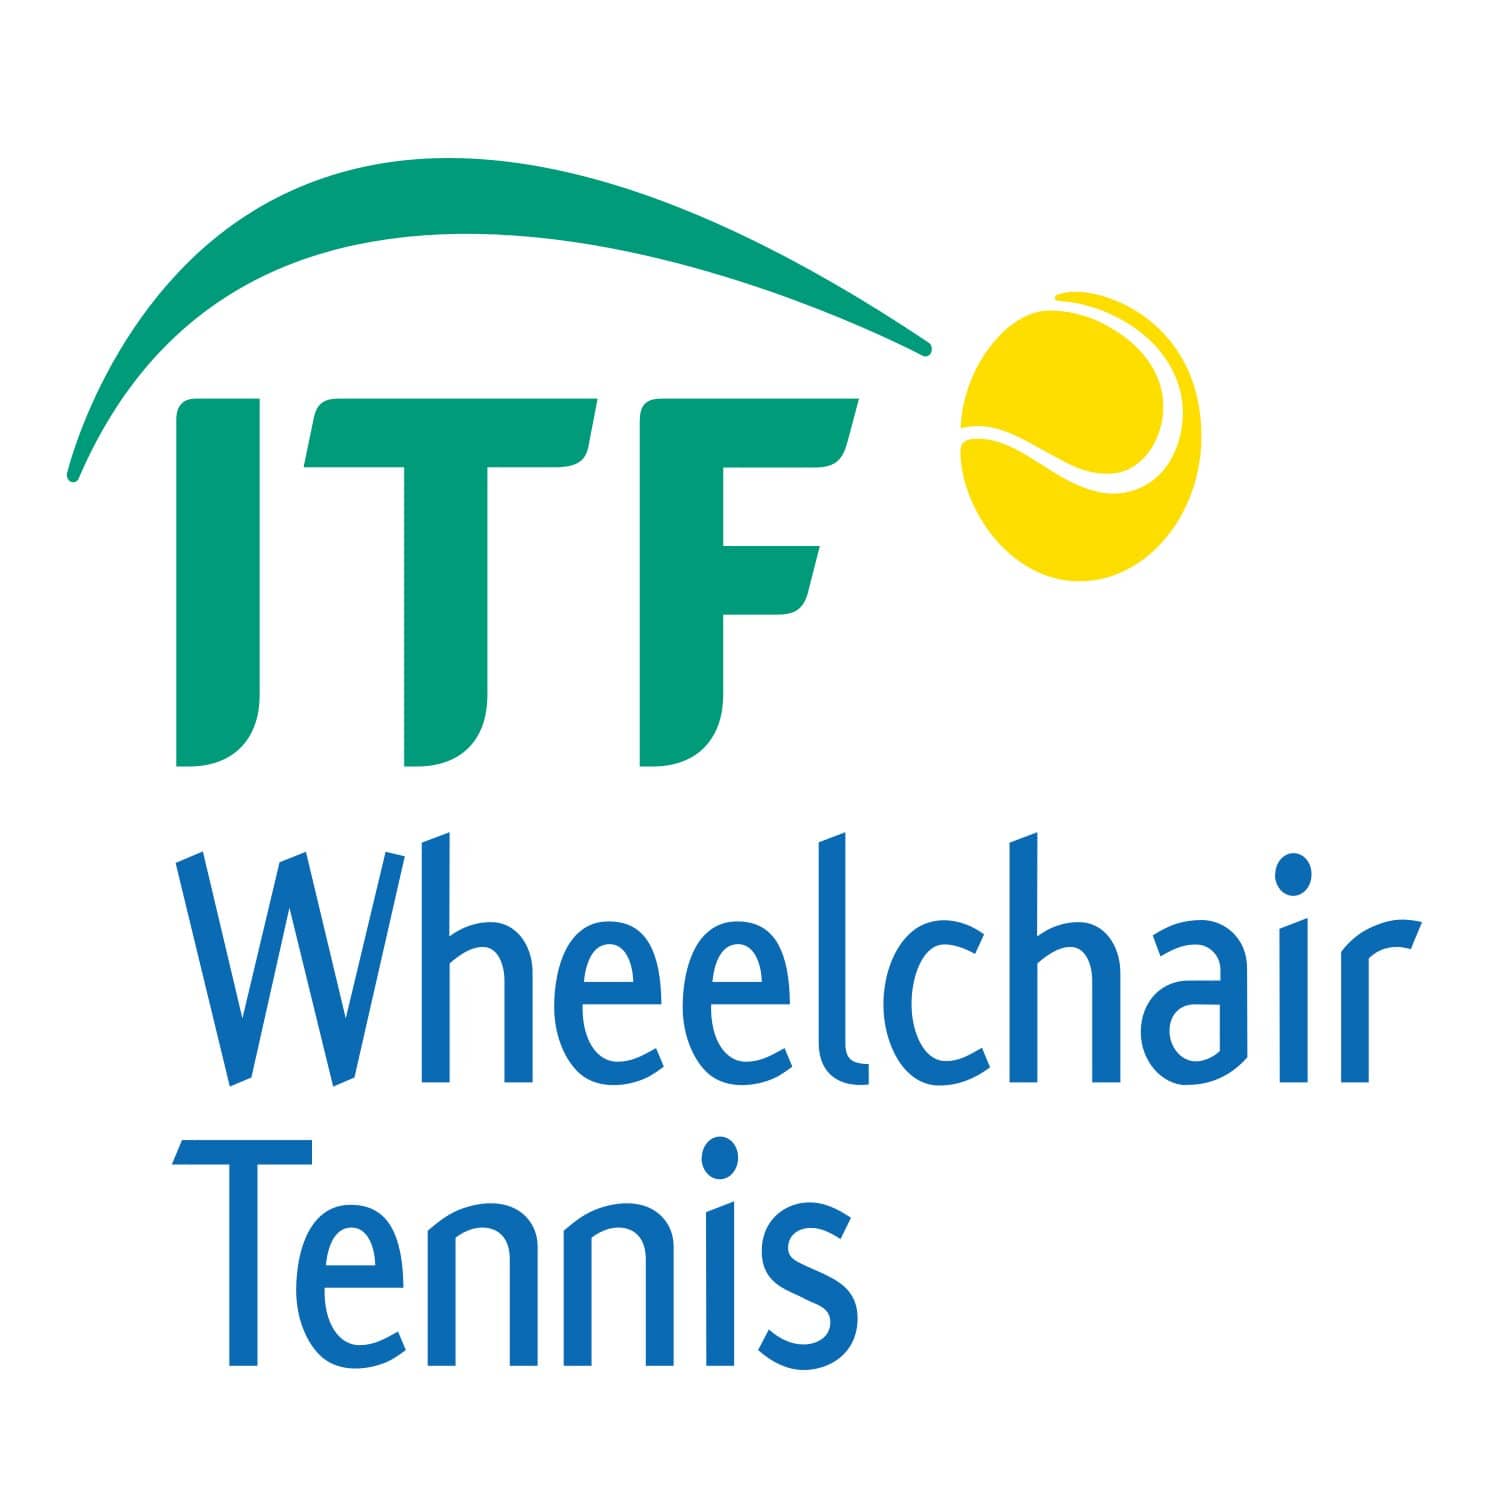 Турнир серии мастерс по теннису на колясках в Нидерландах отменен